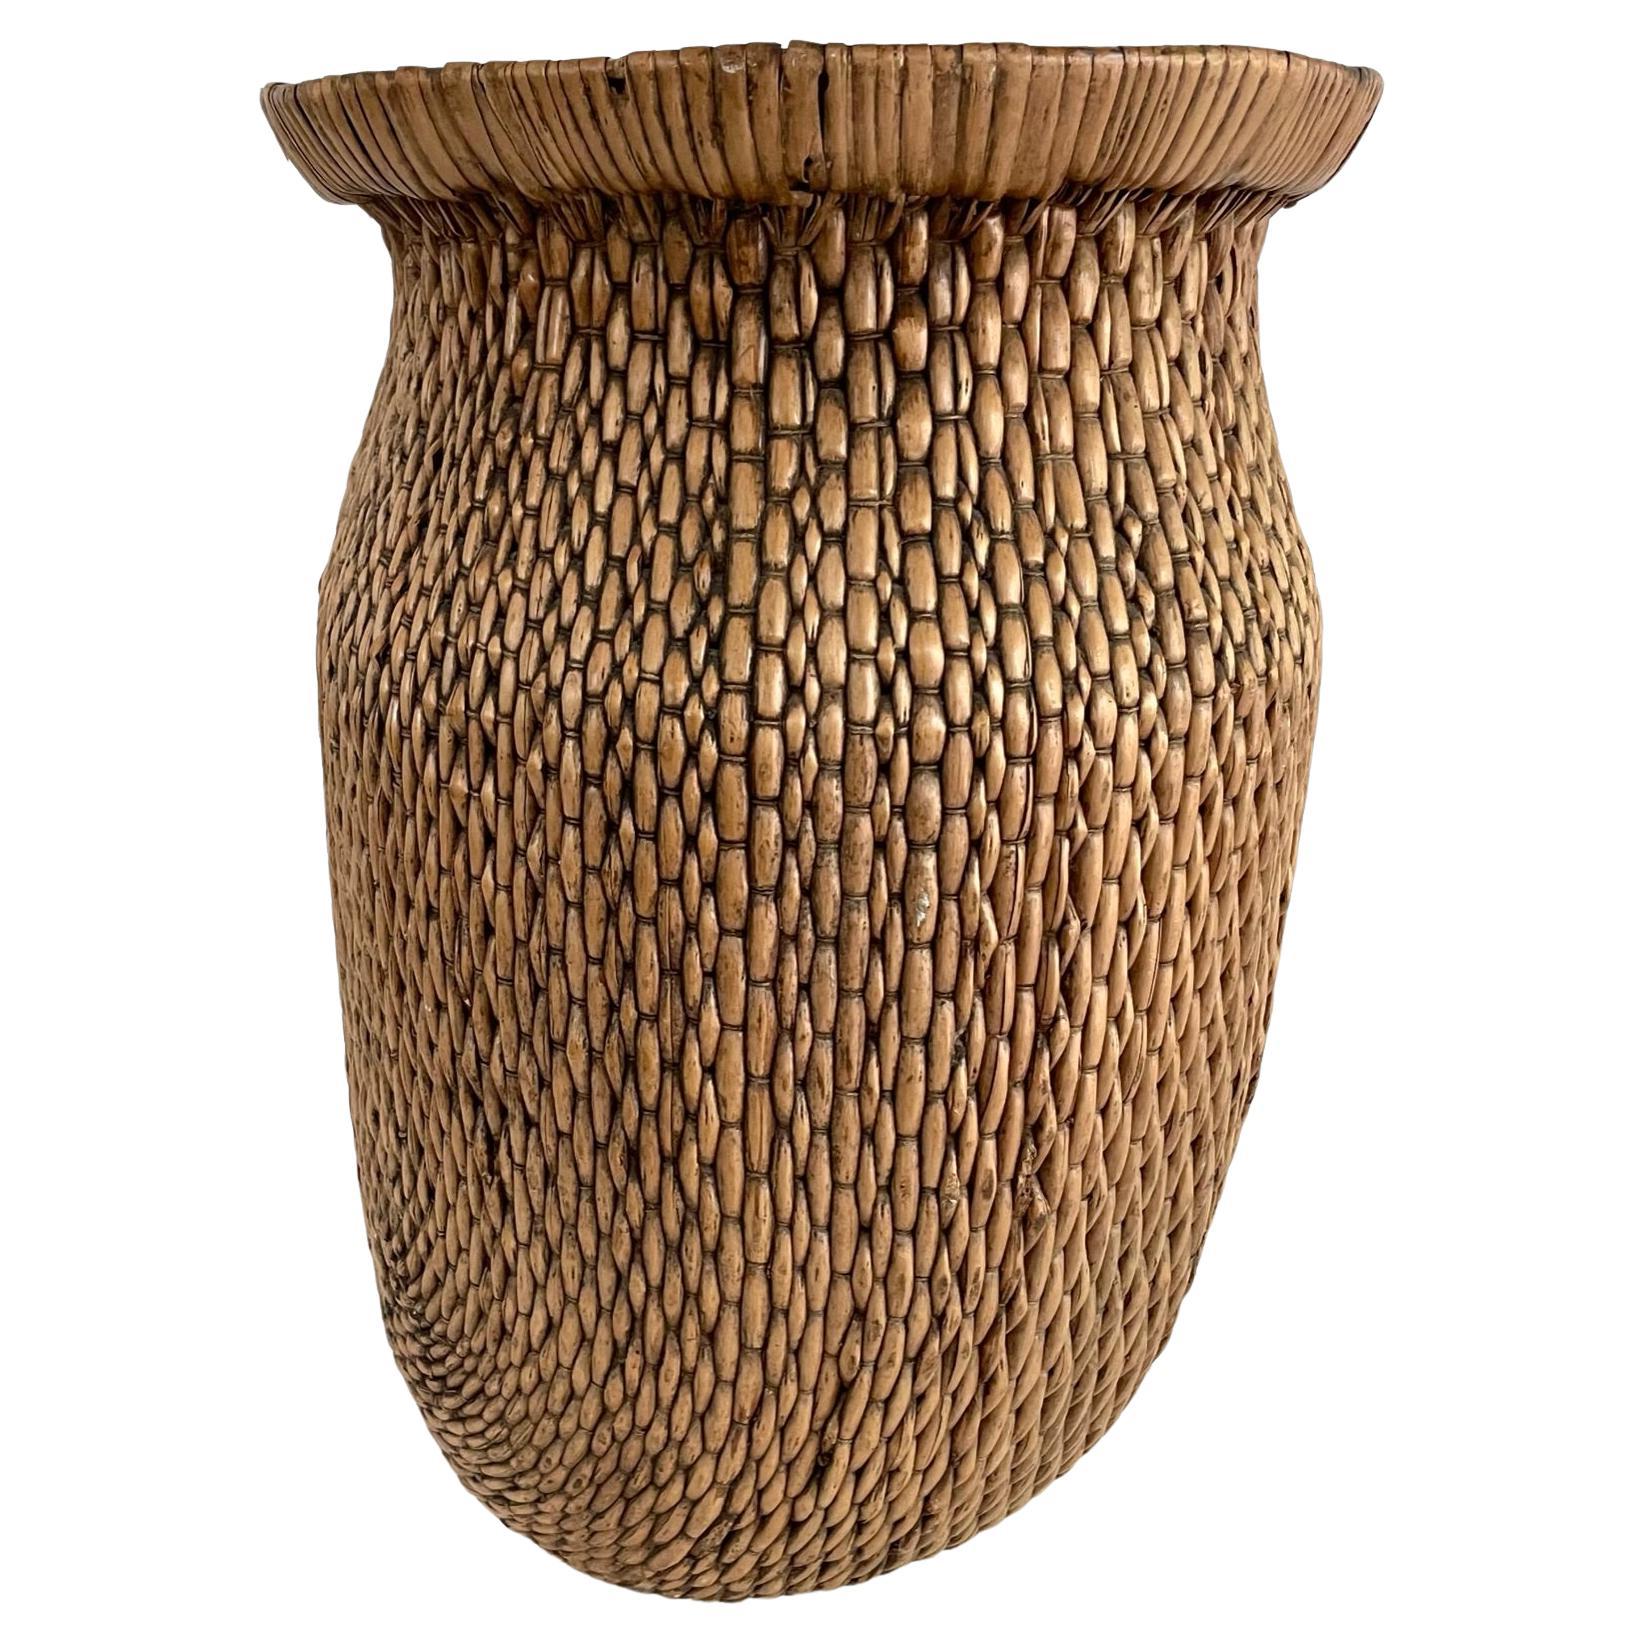 Large Chinese Willow Basket